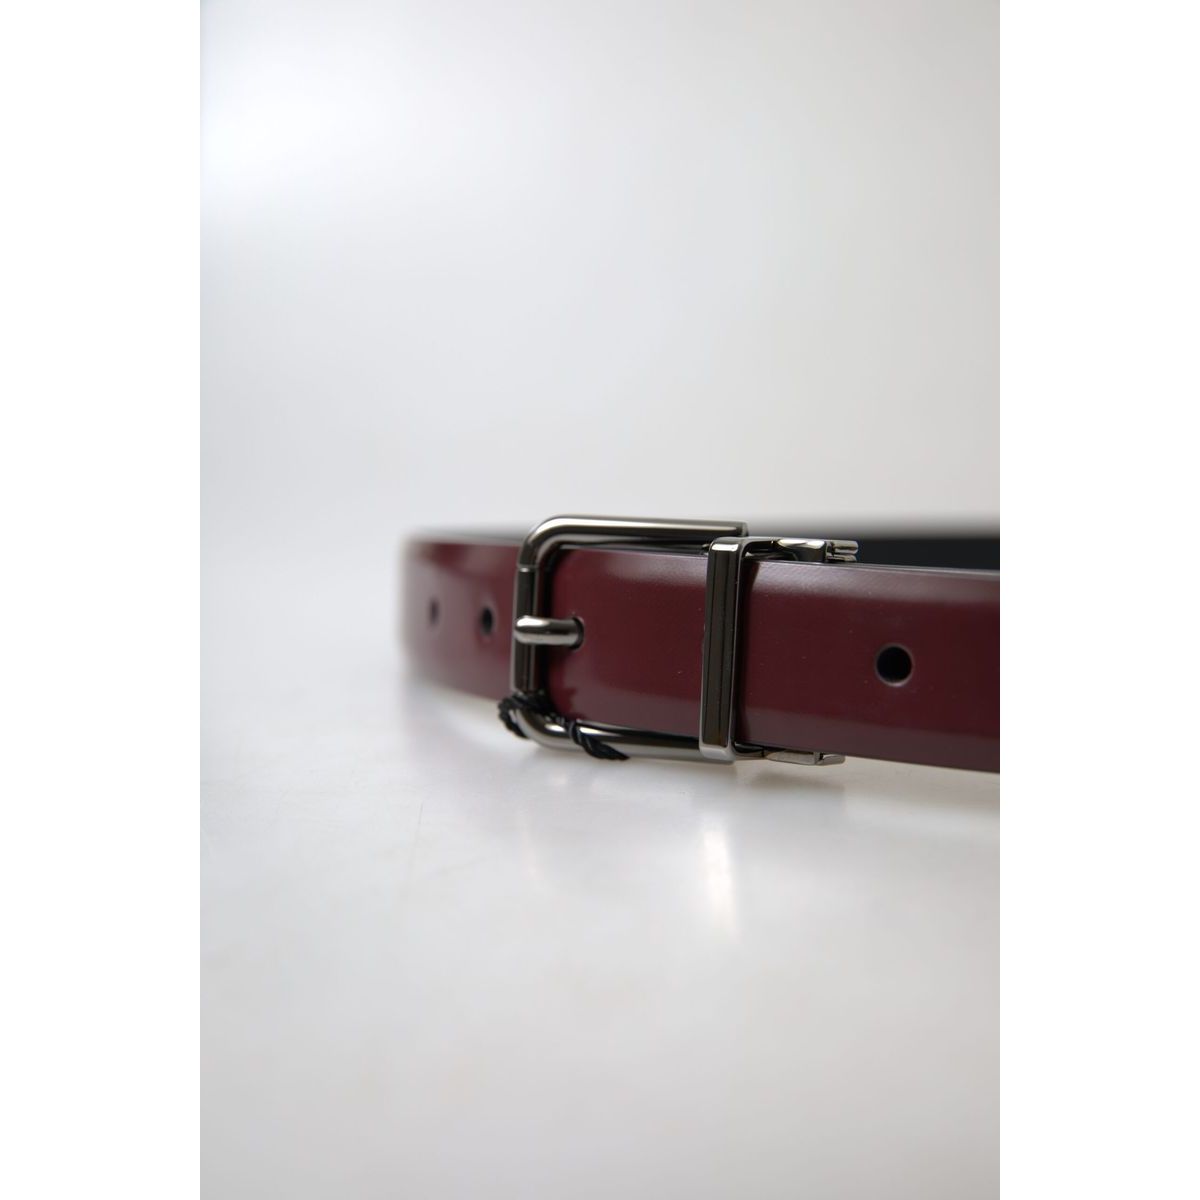 Dolce & Gabbana Elegant Bordeaux Leather Belt with Metal Buckle bordeaux-leather-silver-metal-buckle-belt 465A5146-scaled-00b2cddc-4ac.jpg